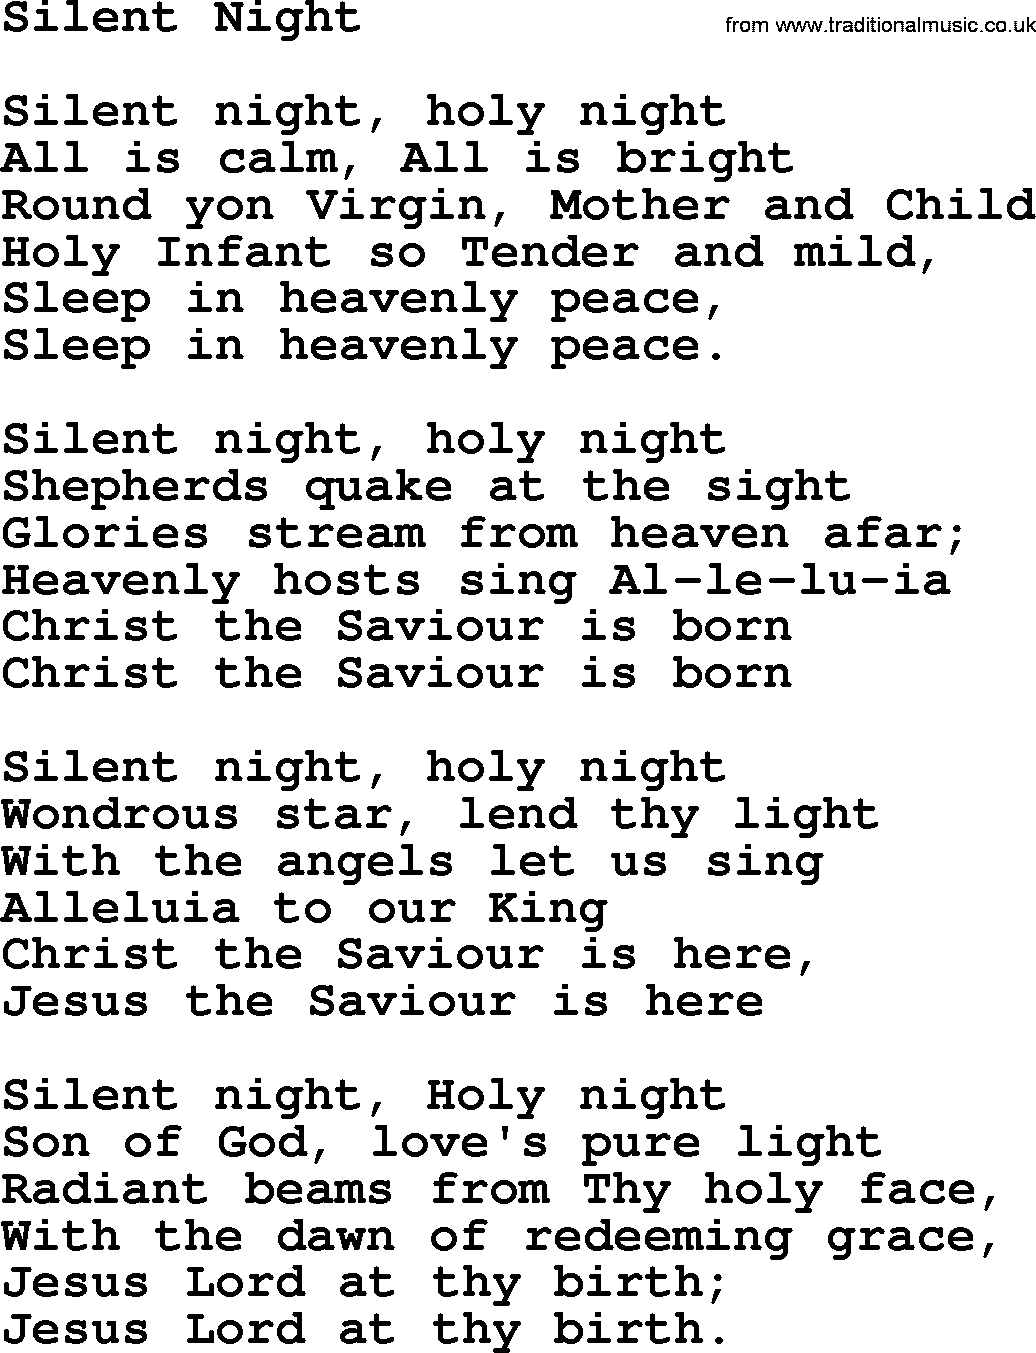 Willie Nelson song: Silent Night lyrics